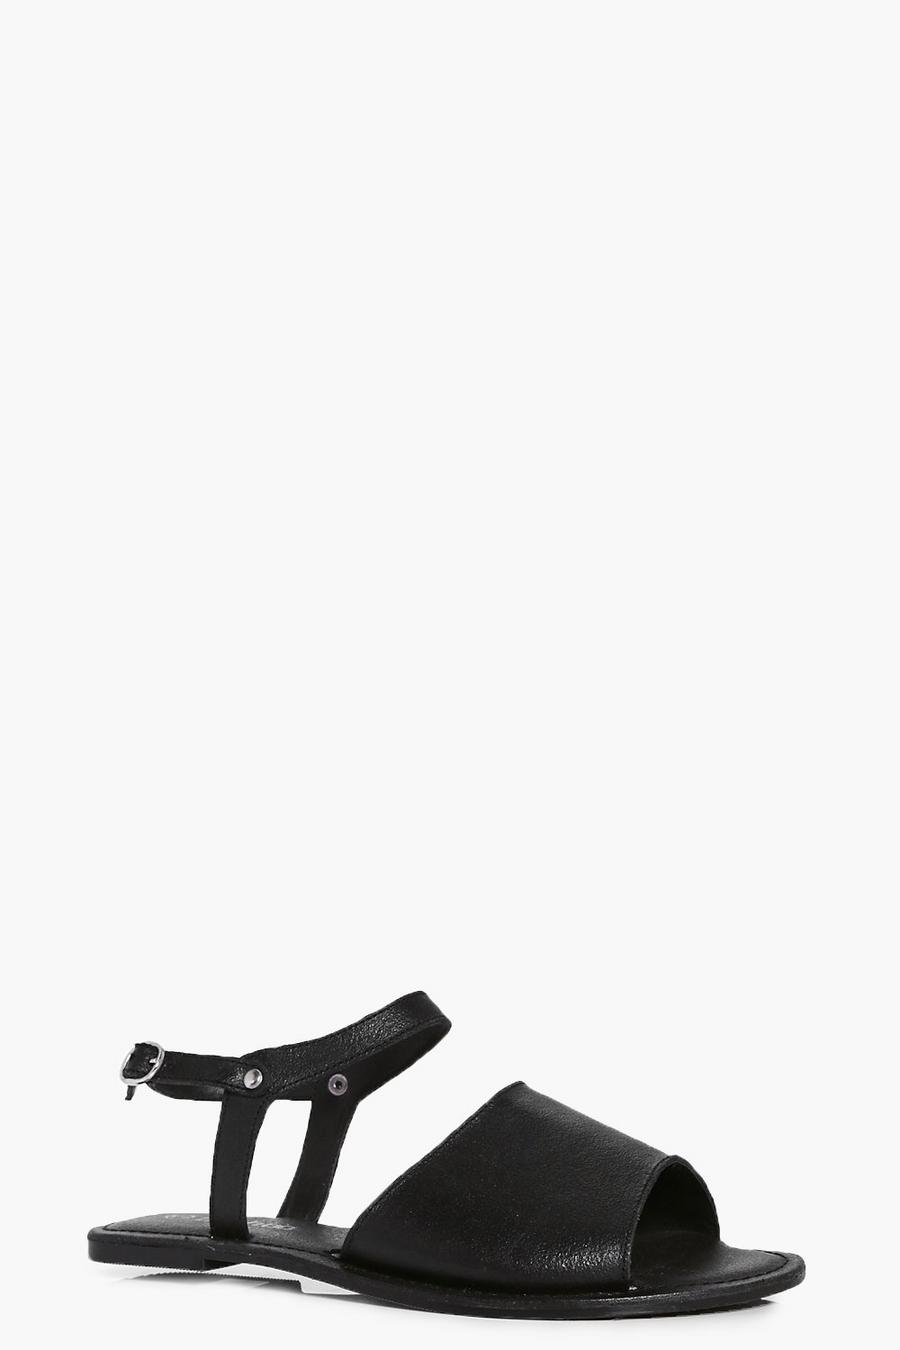 Black Peeptoe Ankle Strap Leather Flat Mule Sandals image number 1